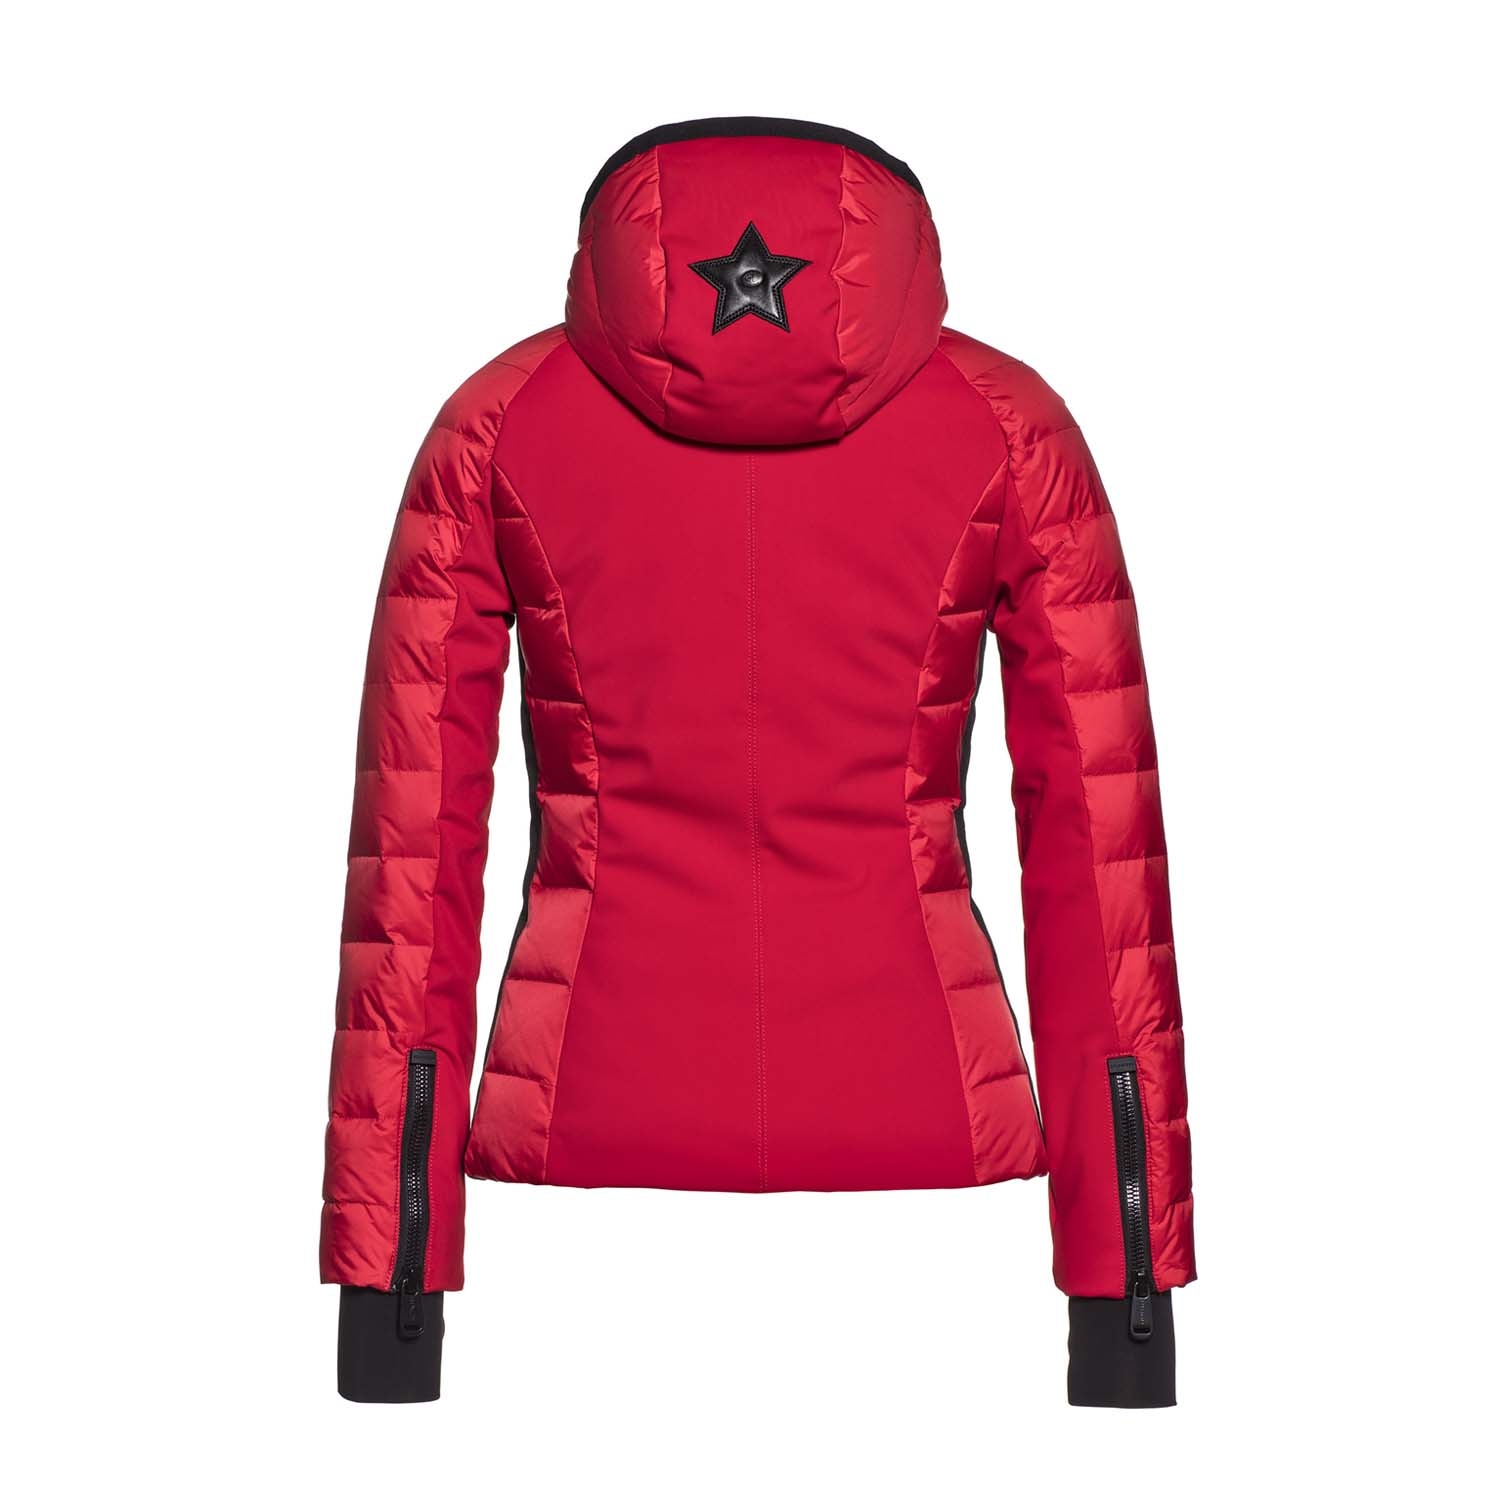 Goldbergh Fosfor Ski Jacket Ruby Red 2021